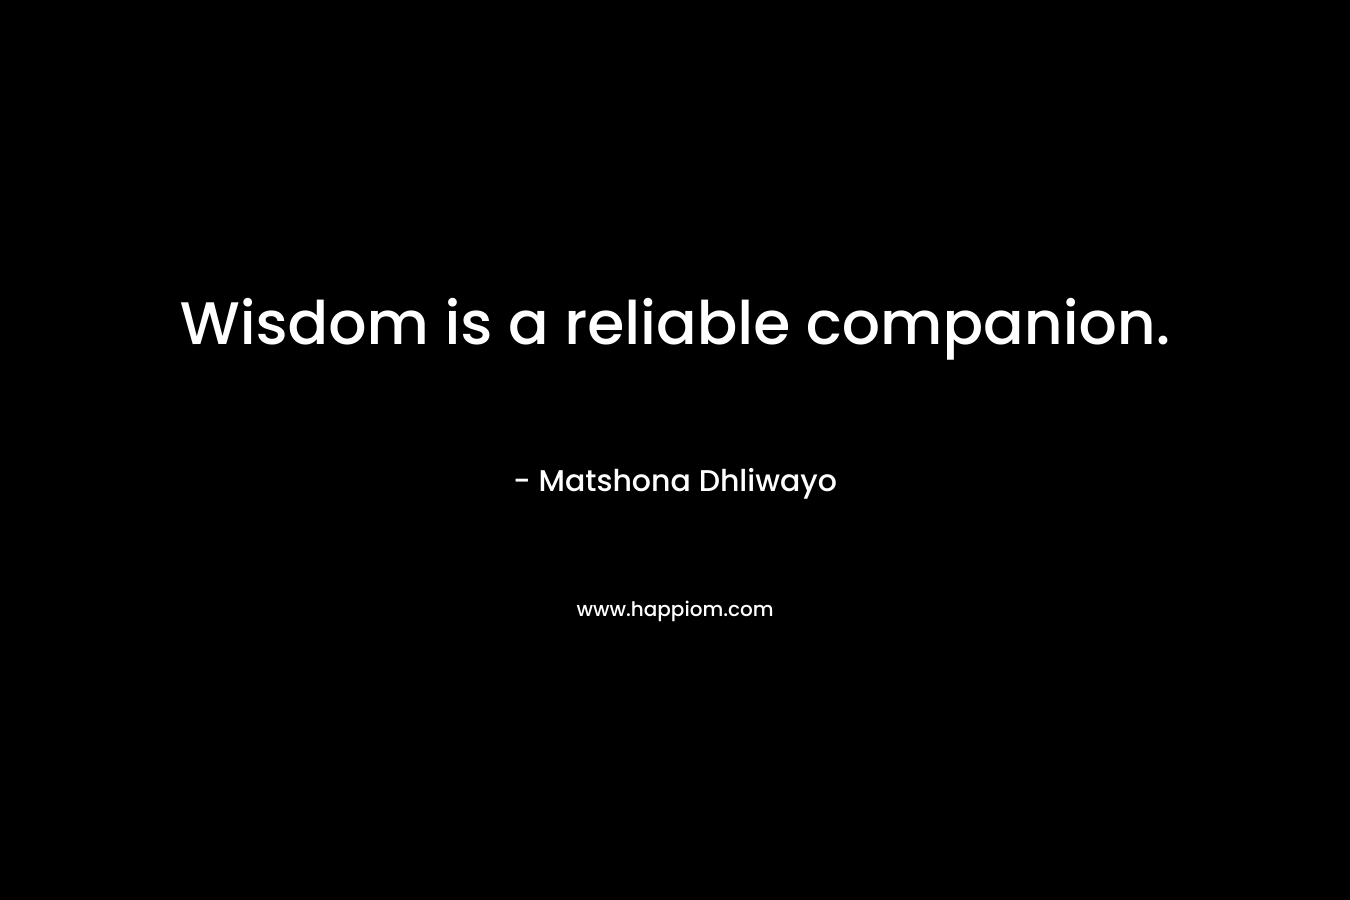 Wisdom is a reliable companion.